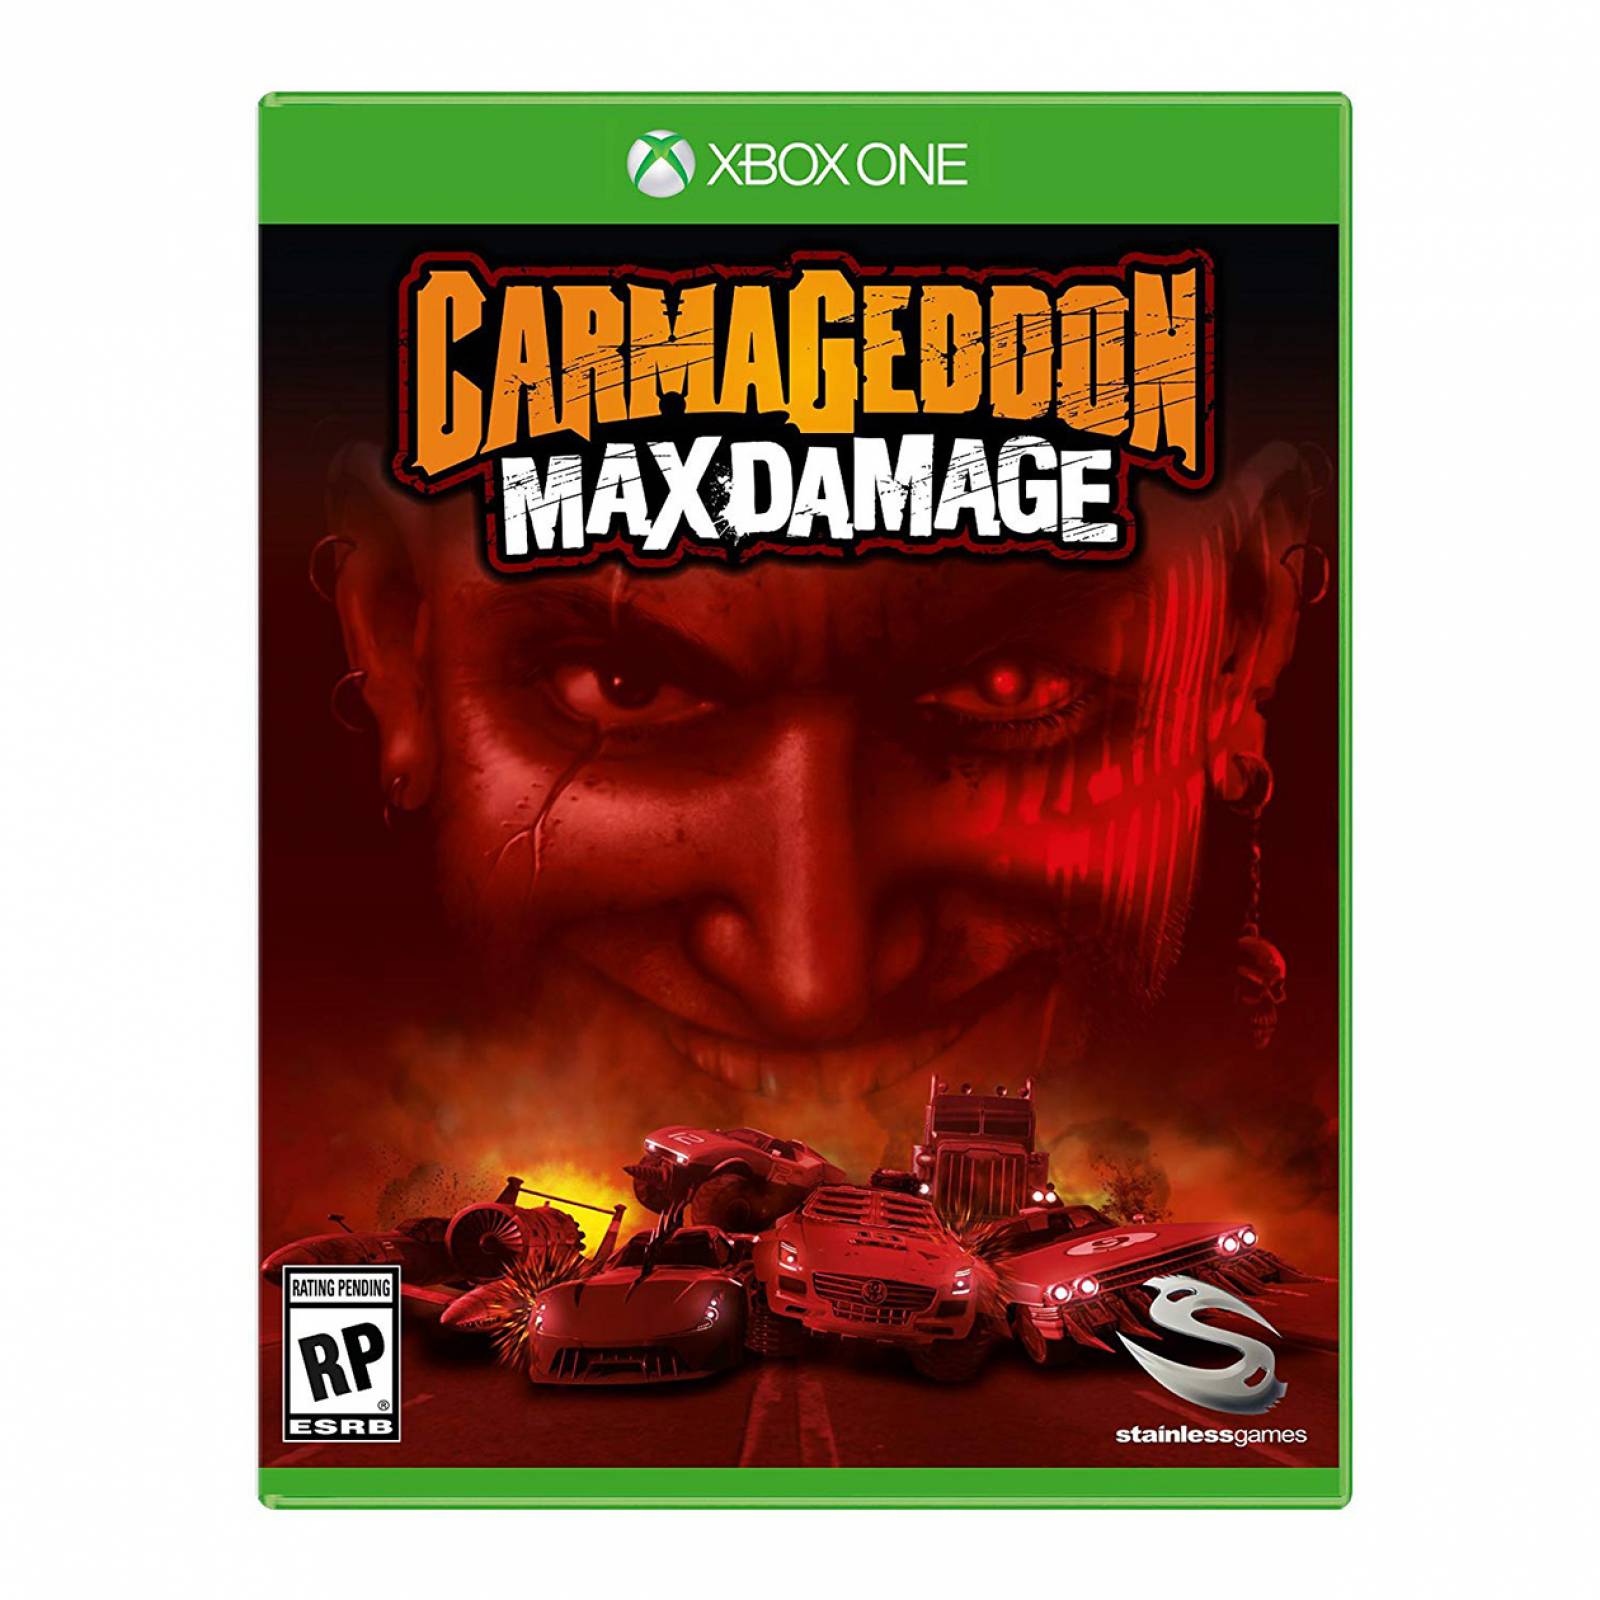 Carmageddon Xbox One